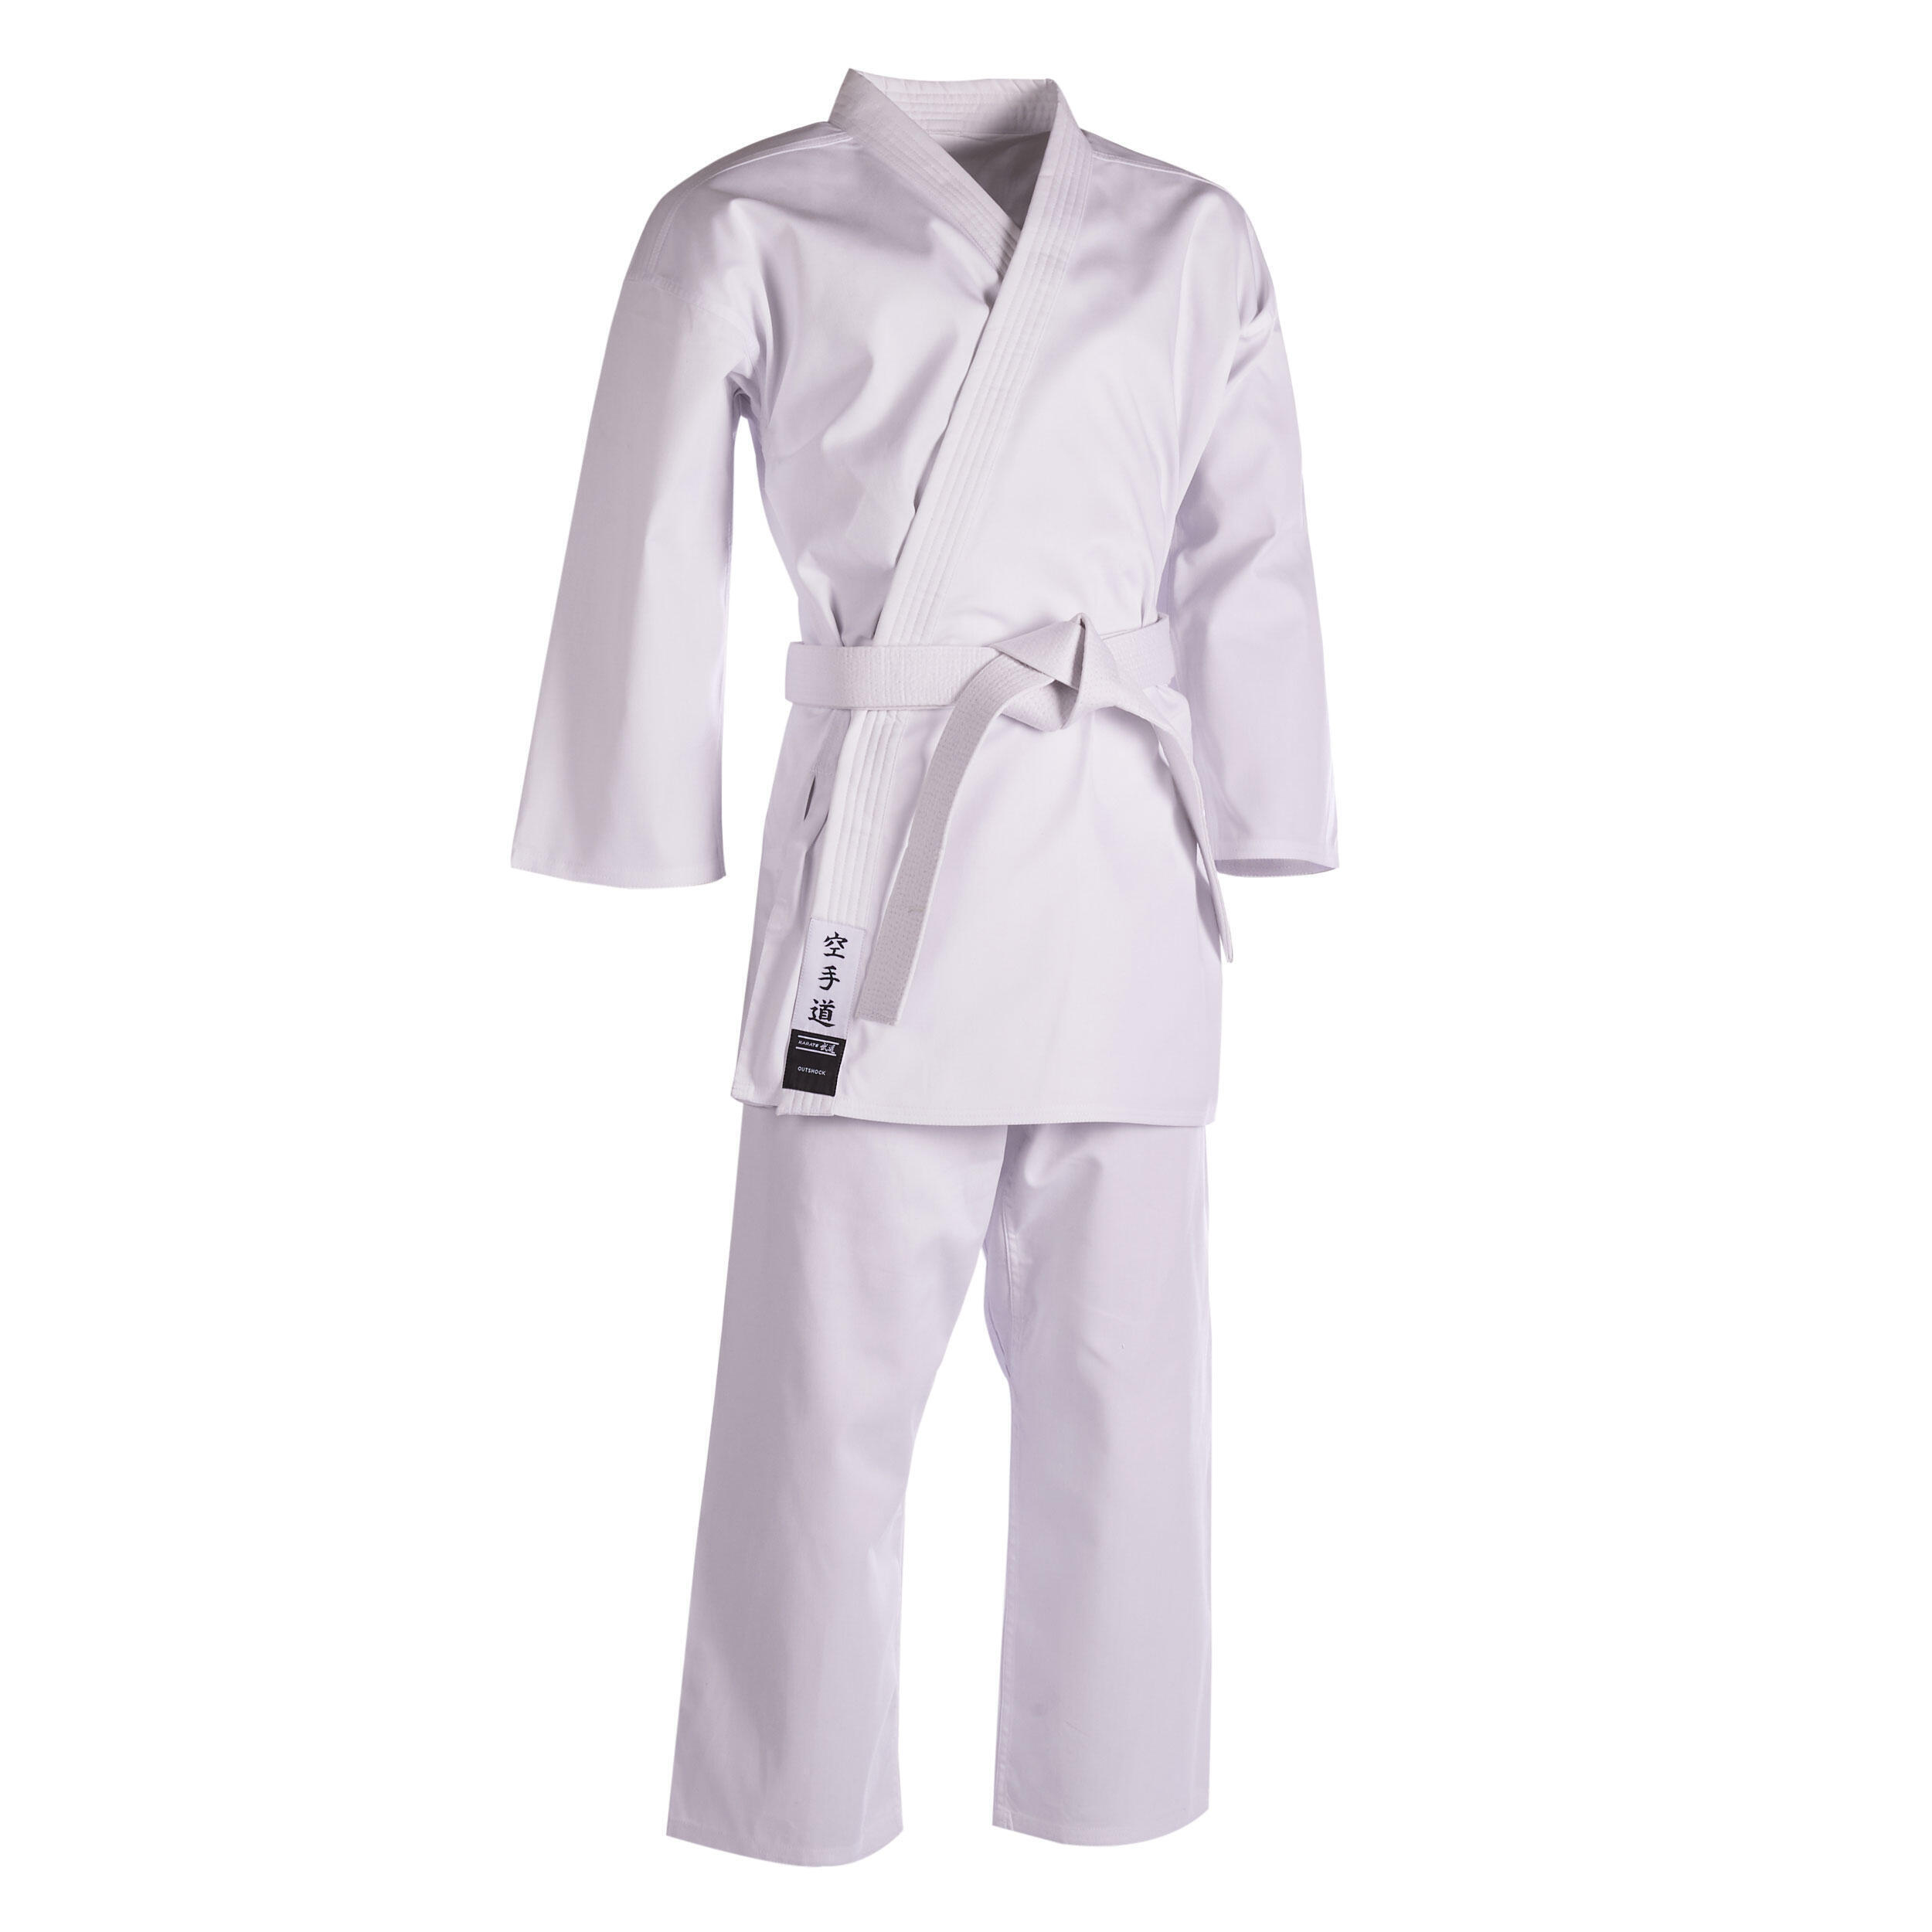 OUTSHOCK Refurbished 100 Adult Karate Uniform - B Grade